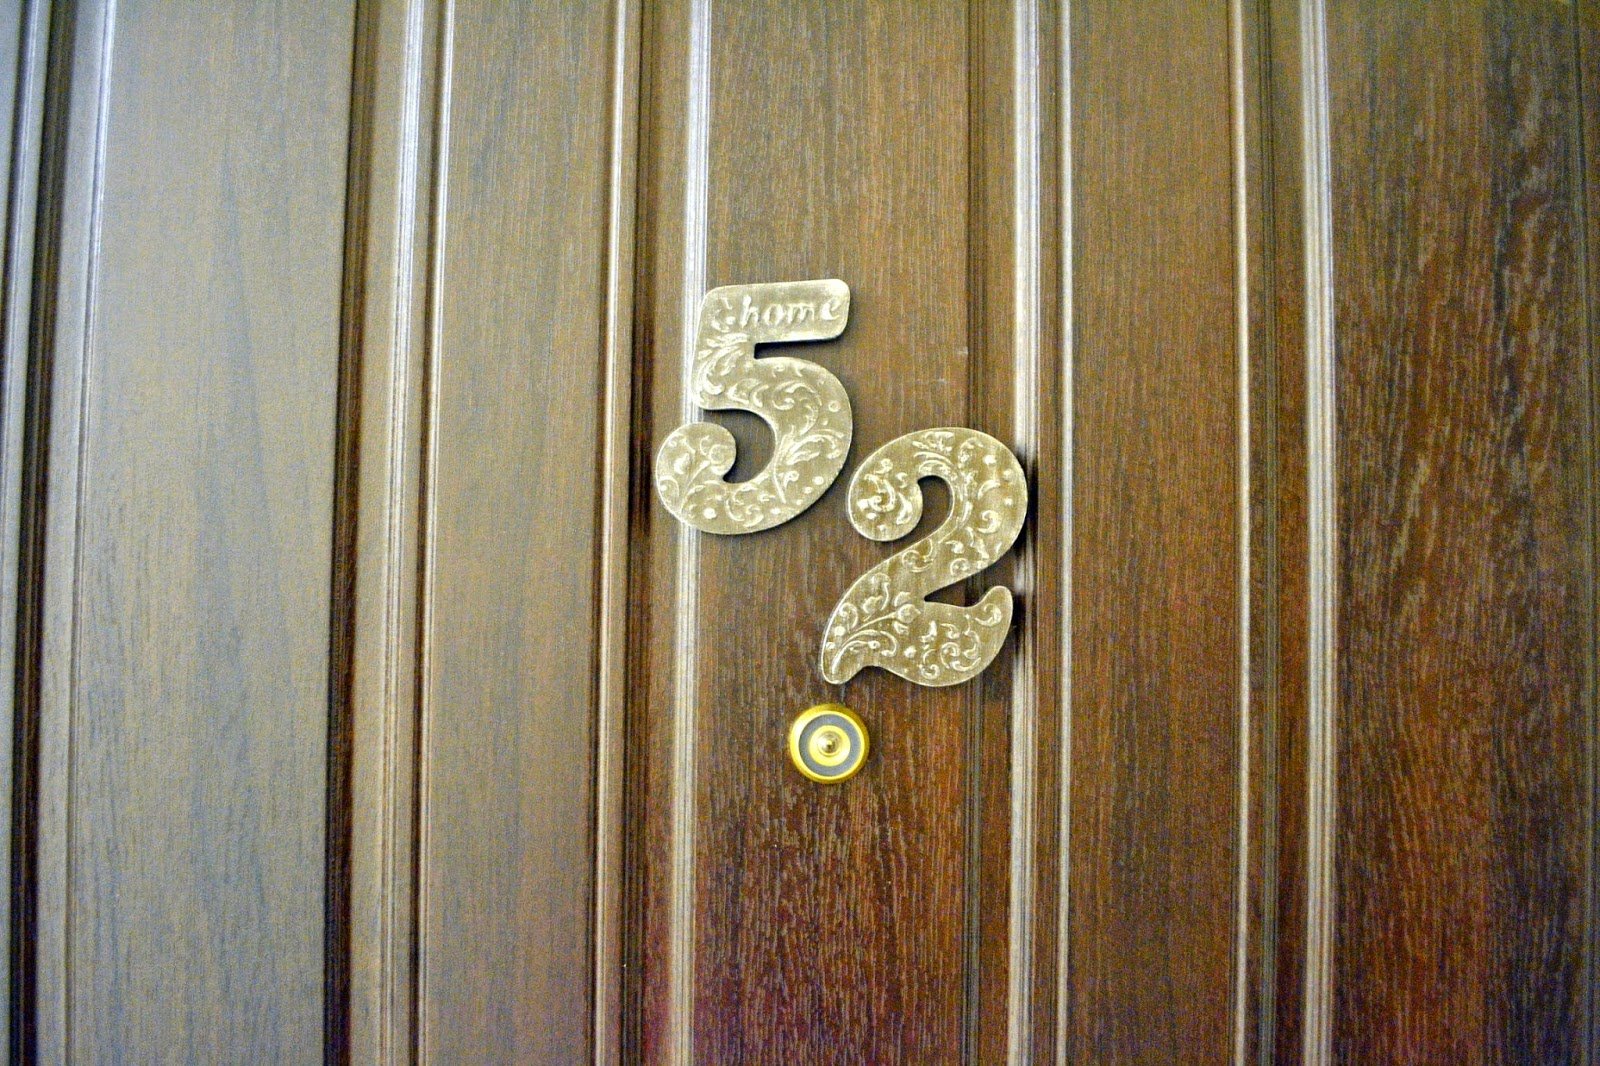 Цифра 1 для квартиры на дверь